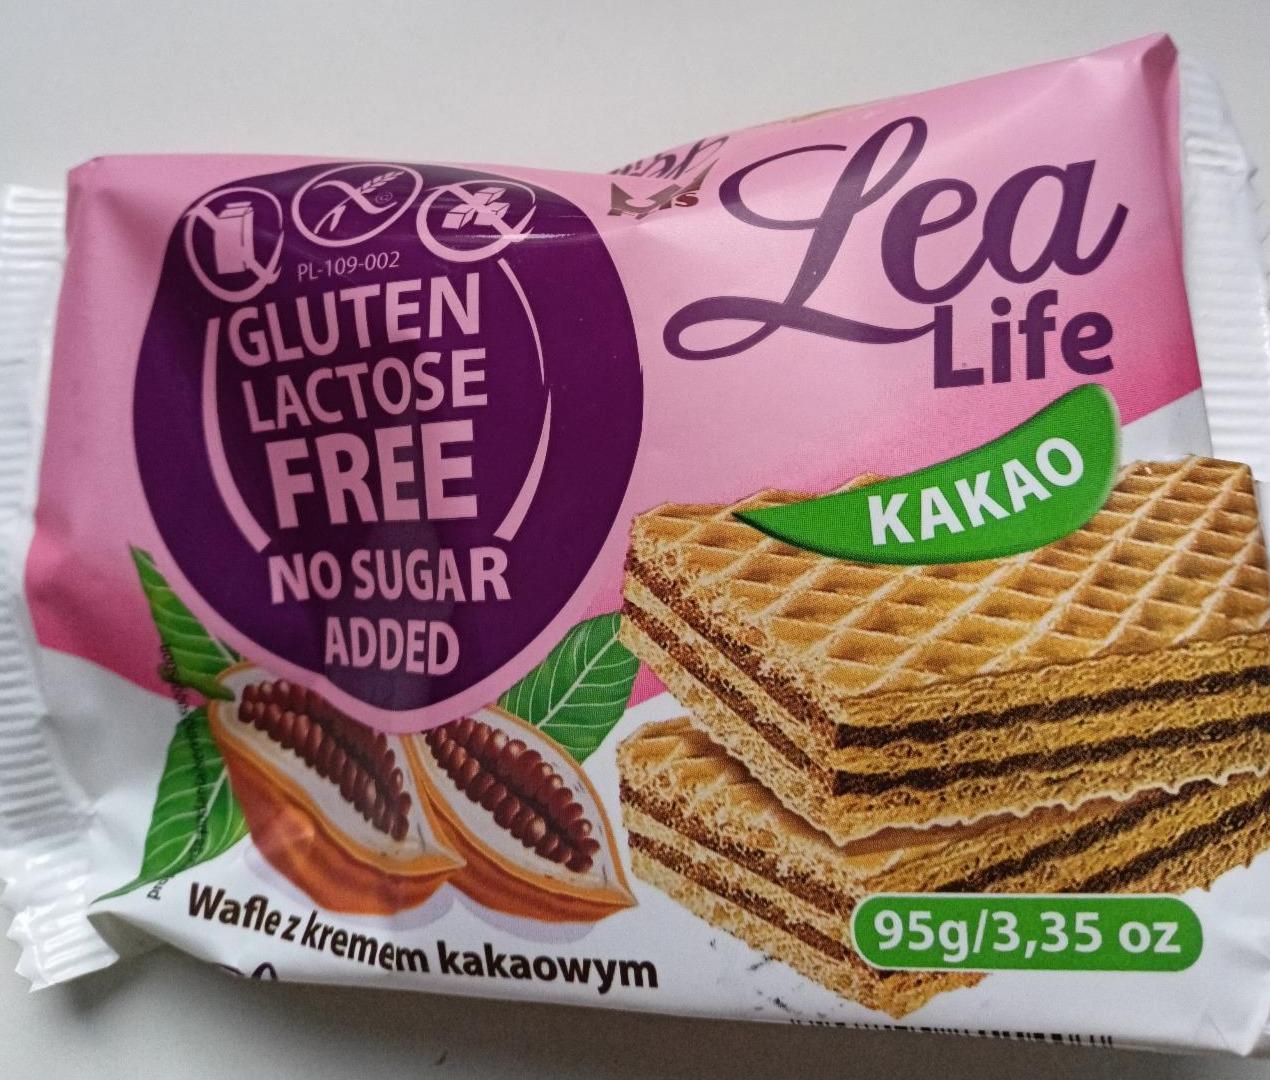 Fotografie - Wafle z kremem kakaowym No sugar added gluten lactose free Lea Life